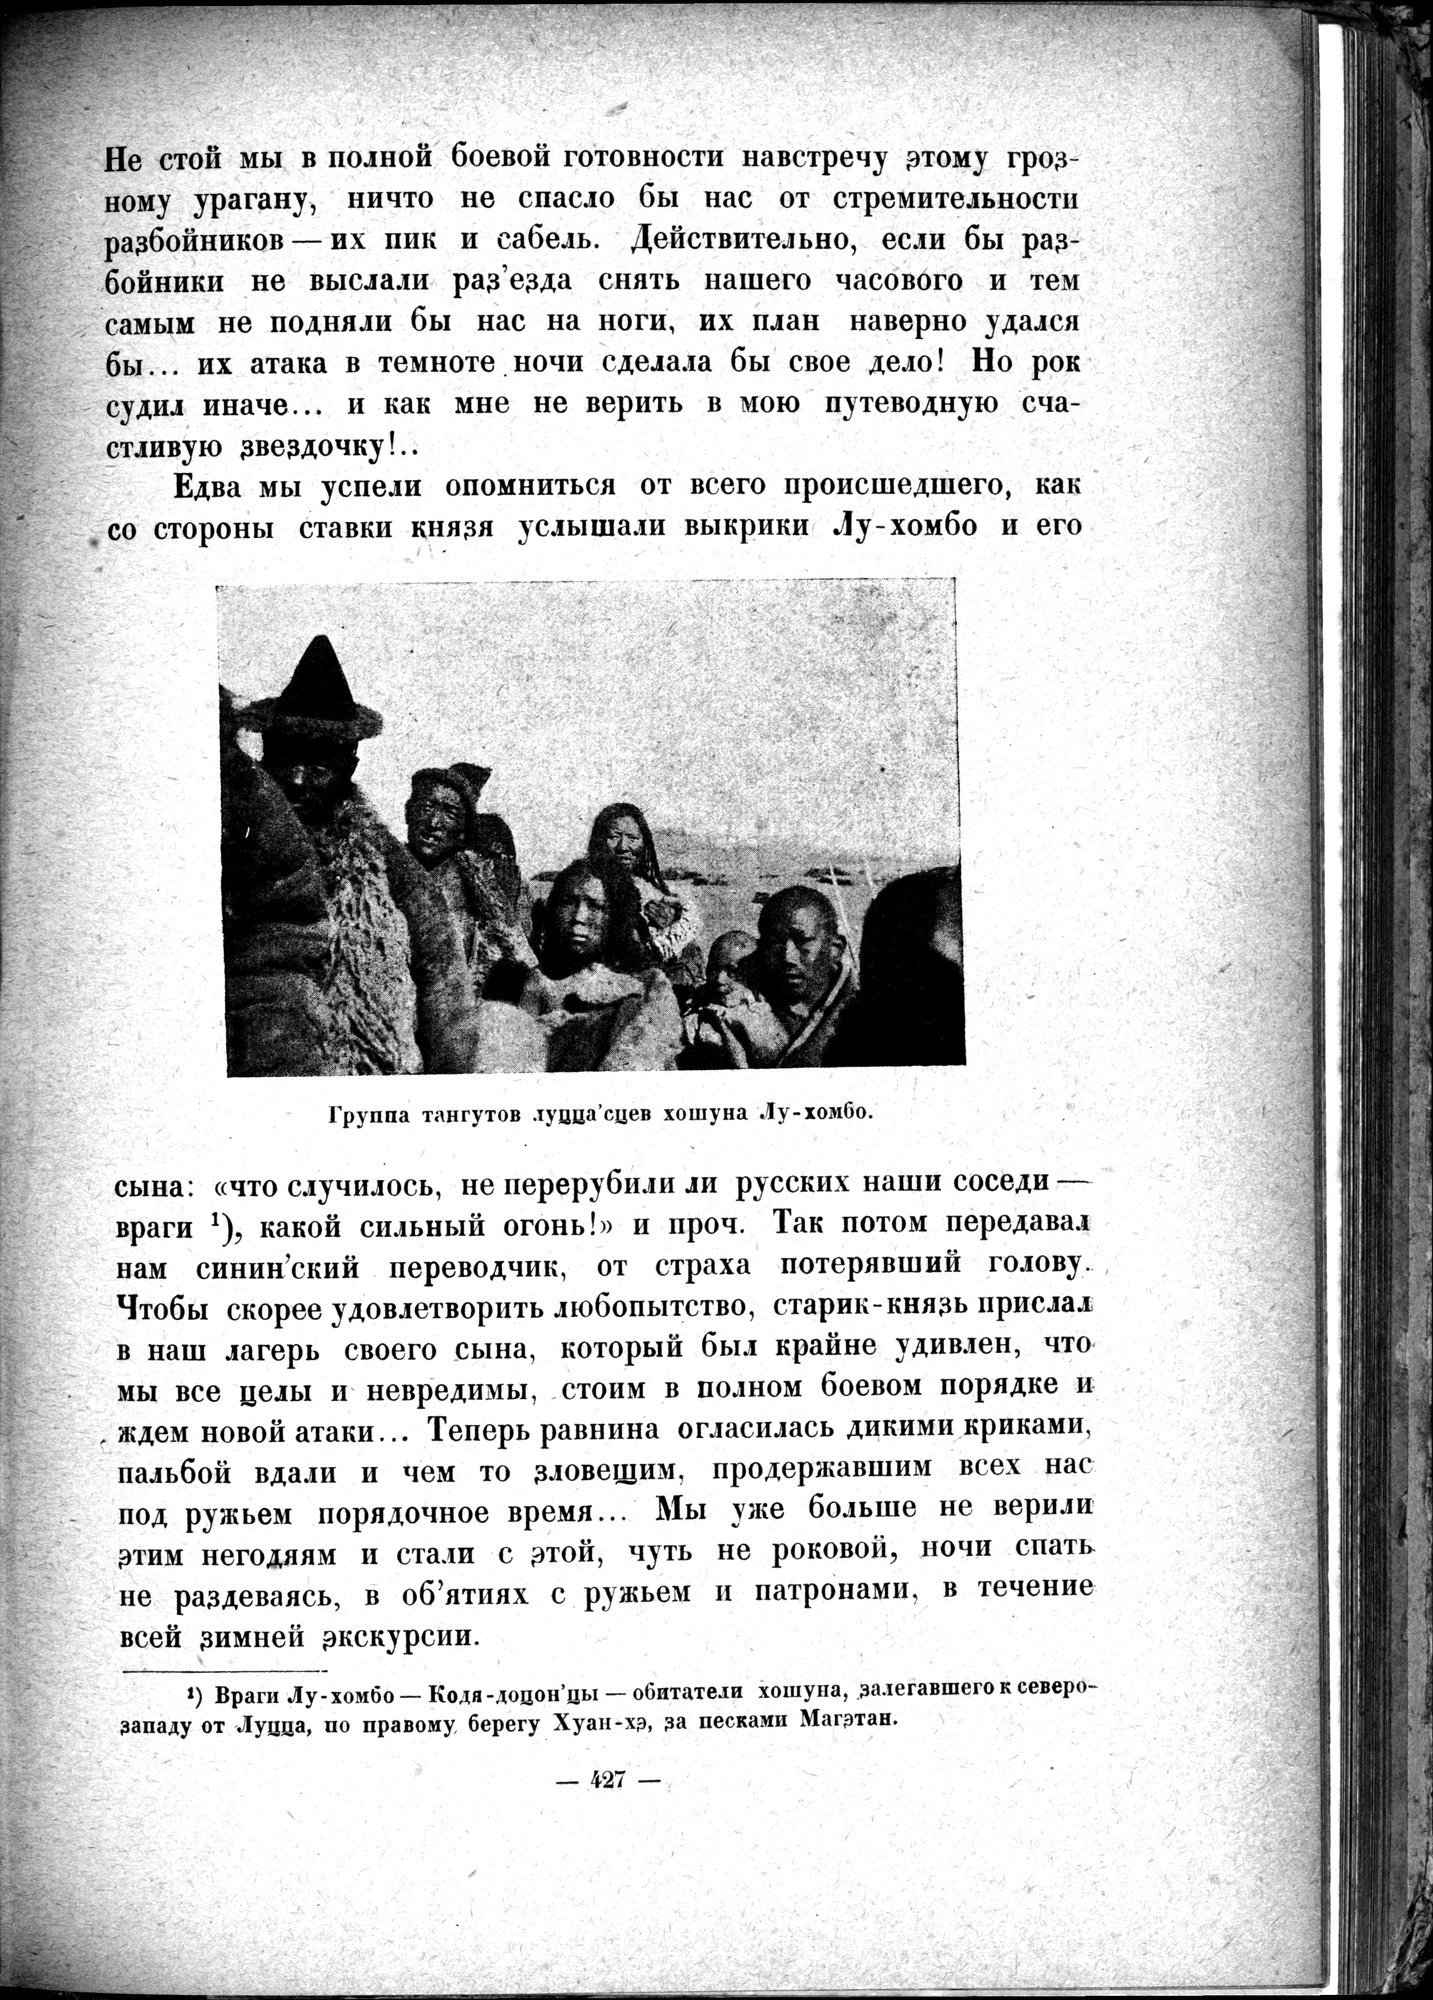 Mongoliya i Amdo i mertby gorod Khara-Khoto : vol.1 / Page 489 (Grayscale High Resolution Image)